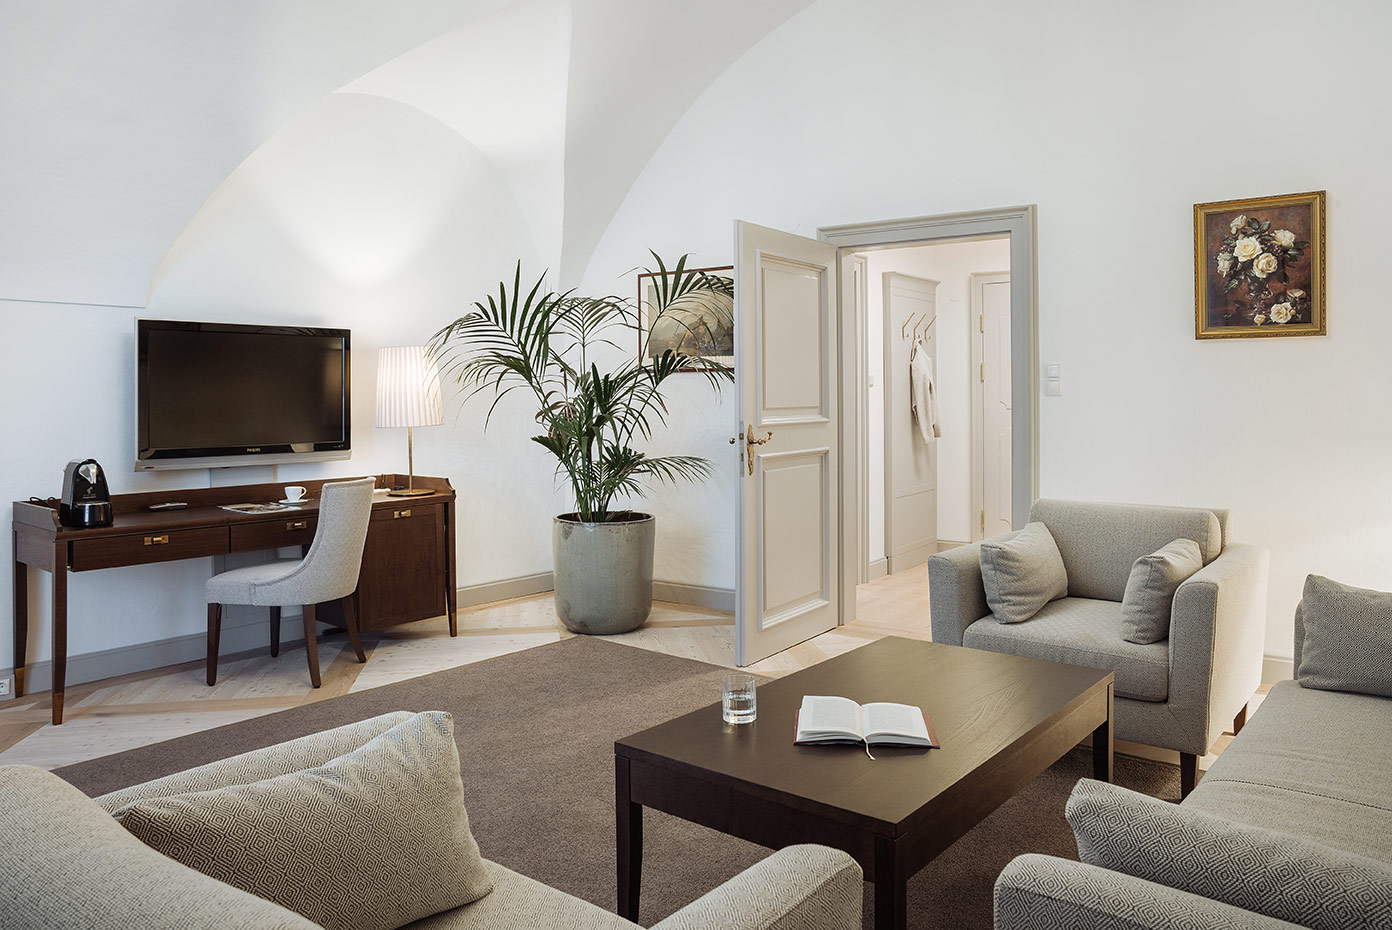 Hotelfotografie | Interieurfotografie | Romantik Hotel Schloss Pichlarn 003 | Richard Schabetsberger